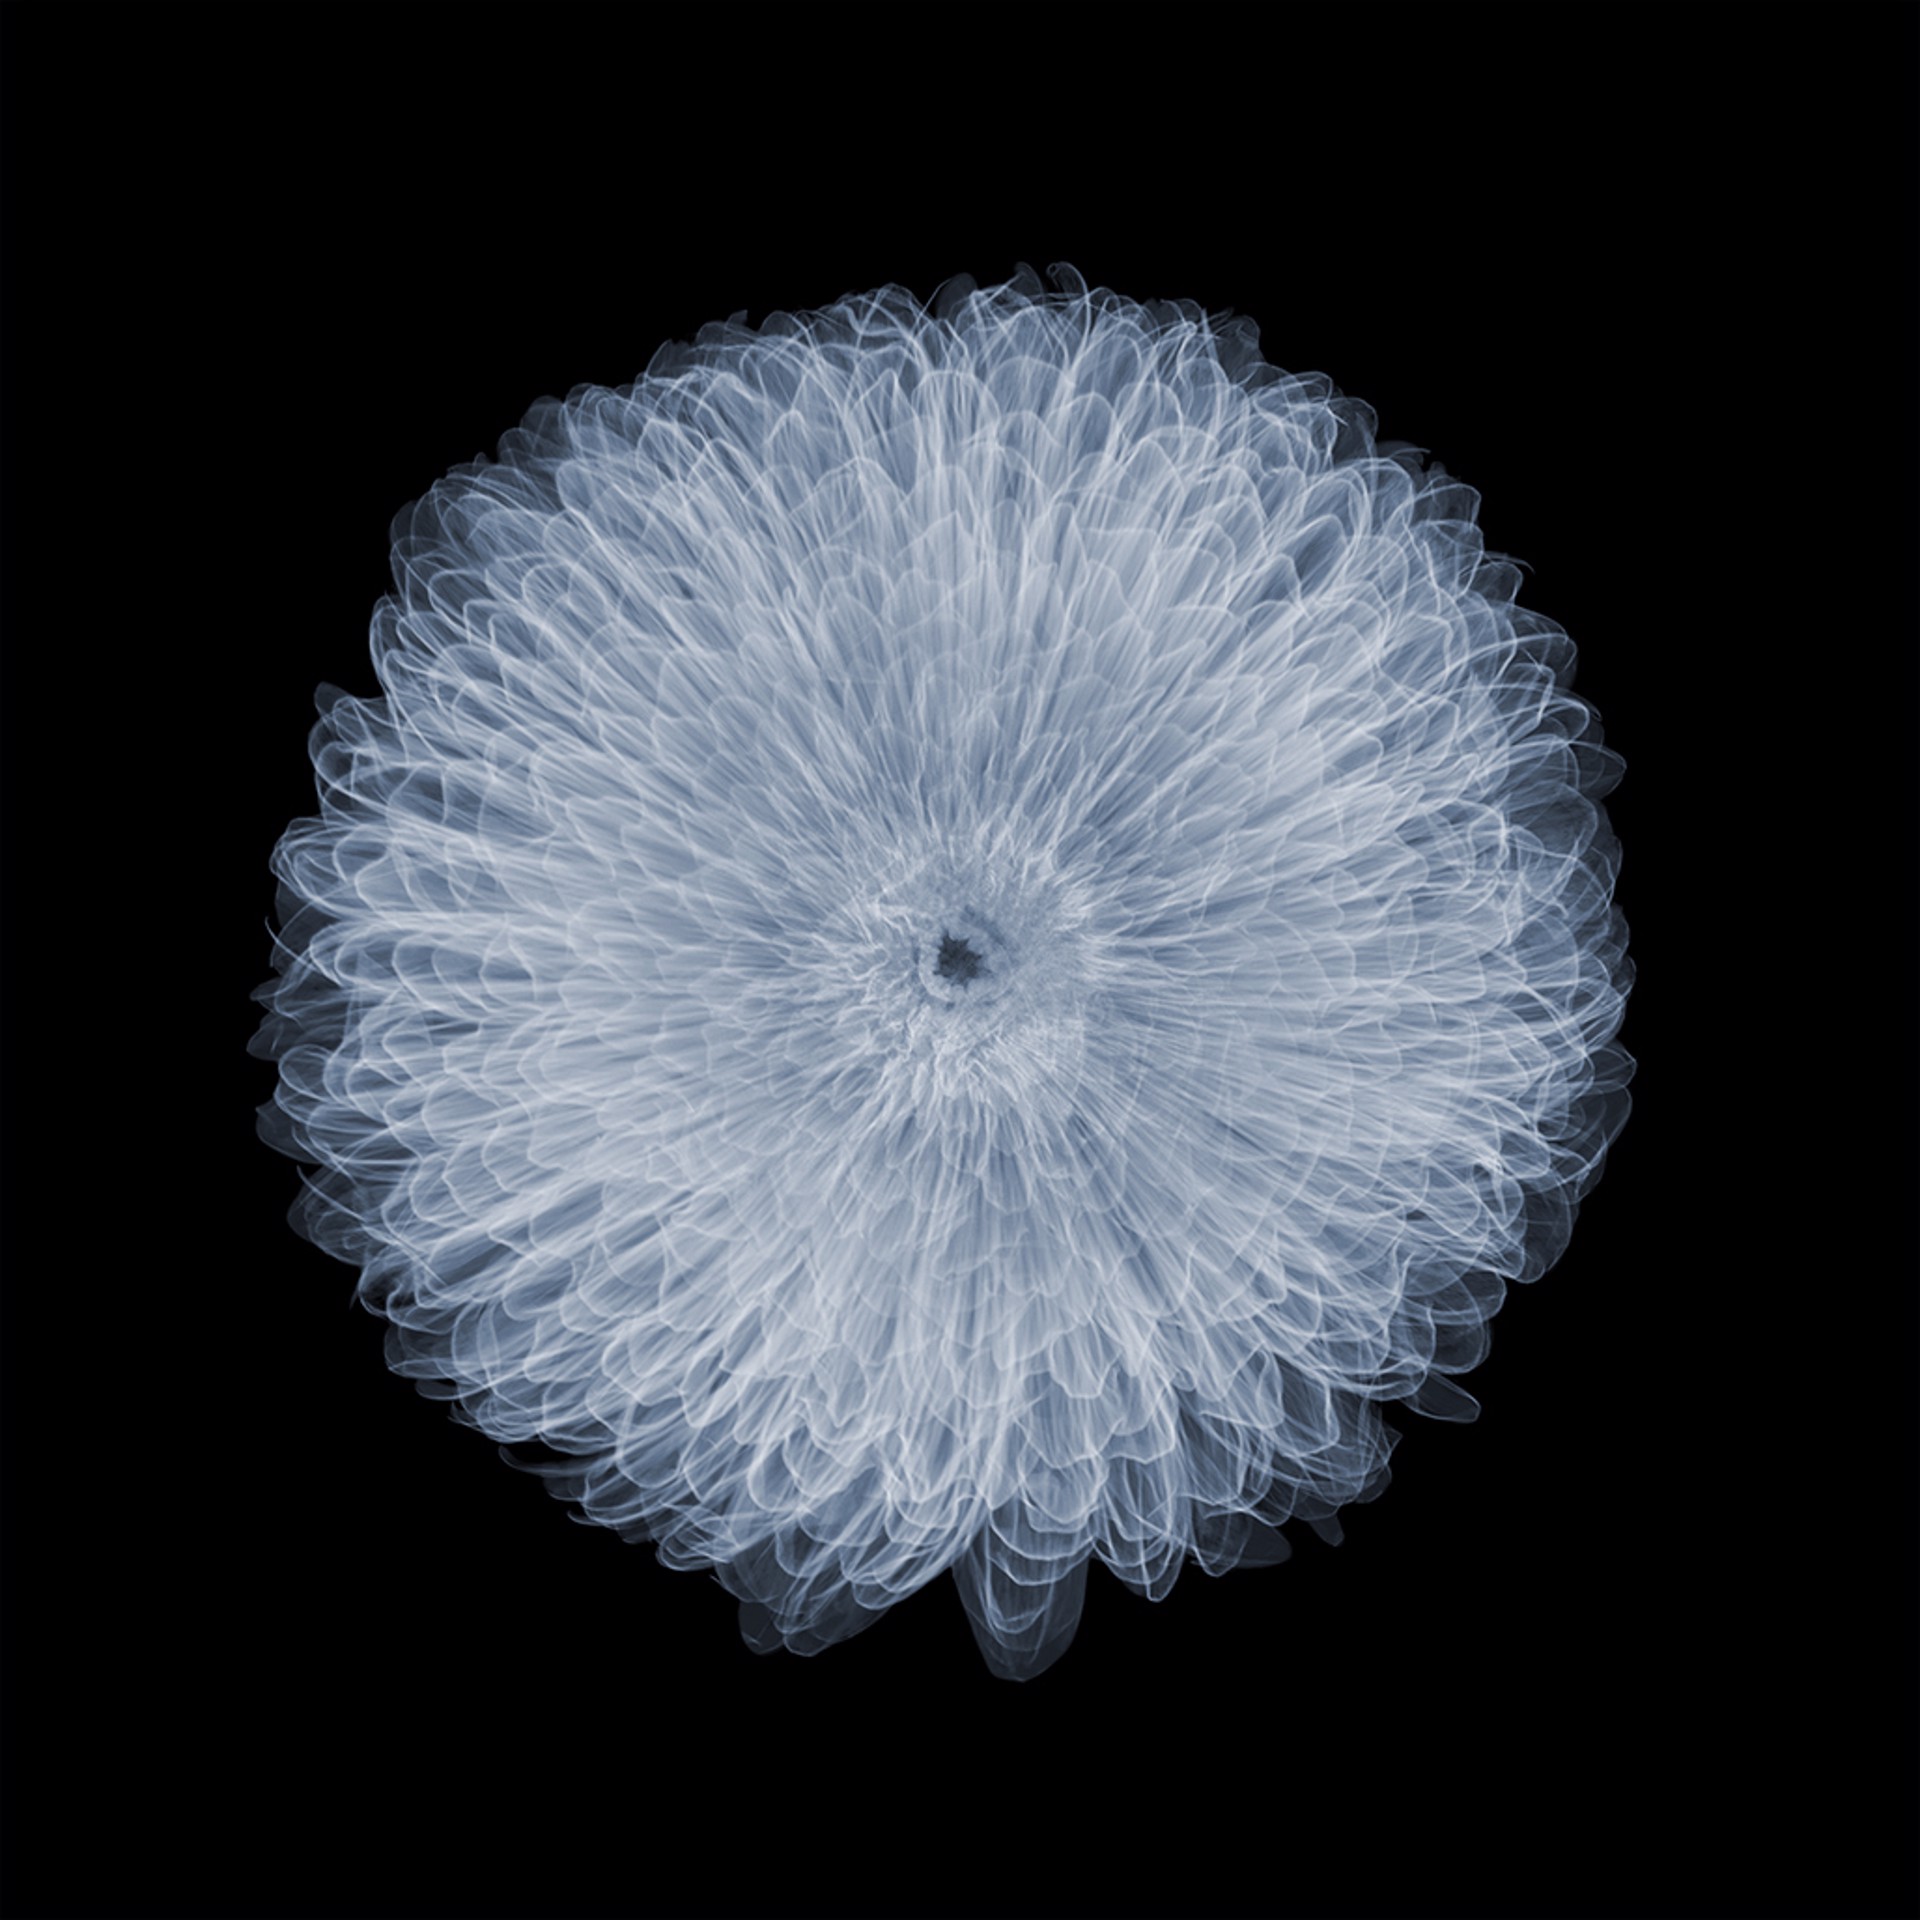 Chrysanthemum by Nick Veasey